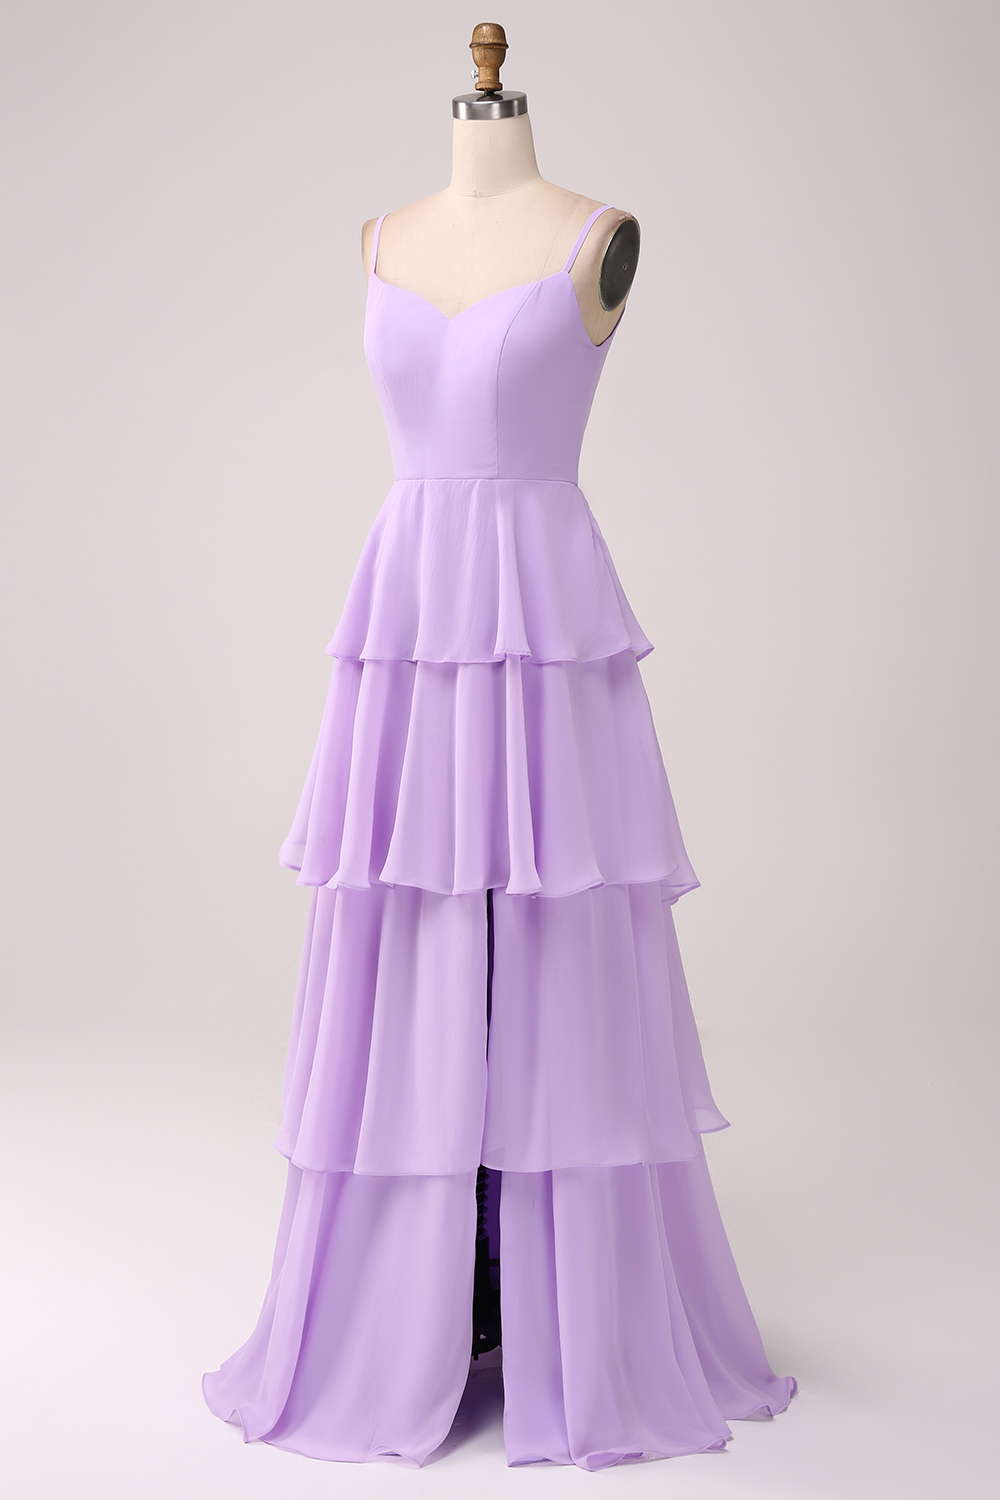 Tiered Chiffon Lilac Bridesmaid Dress with Slit